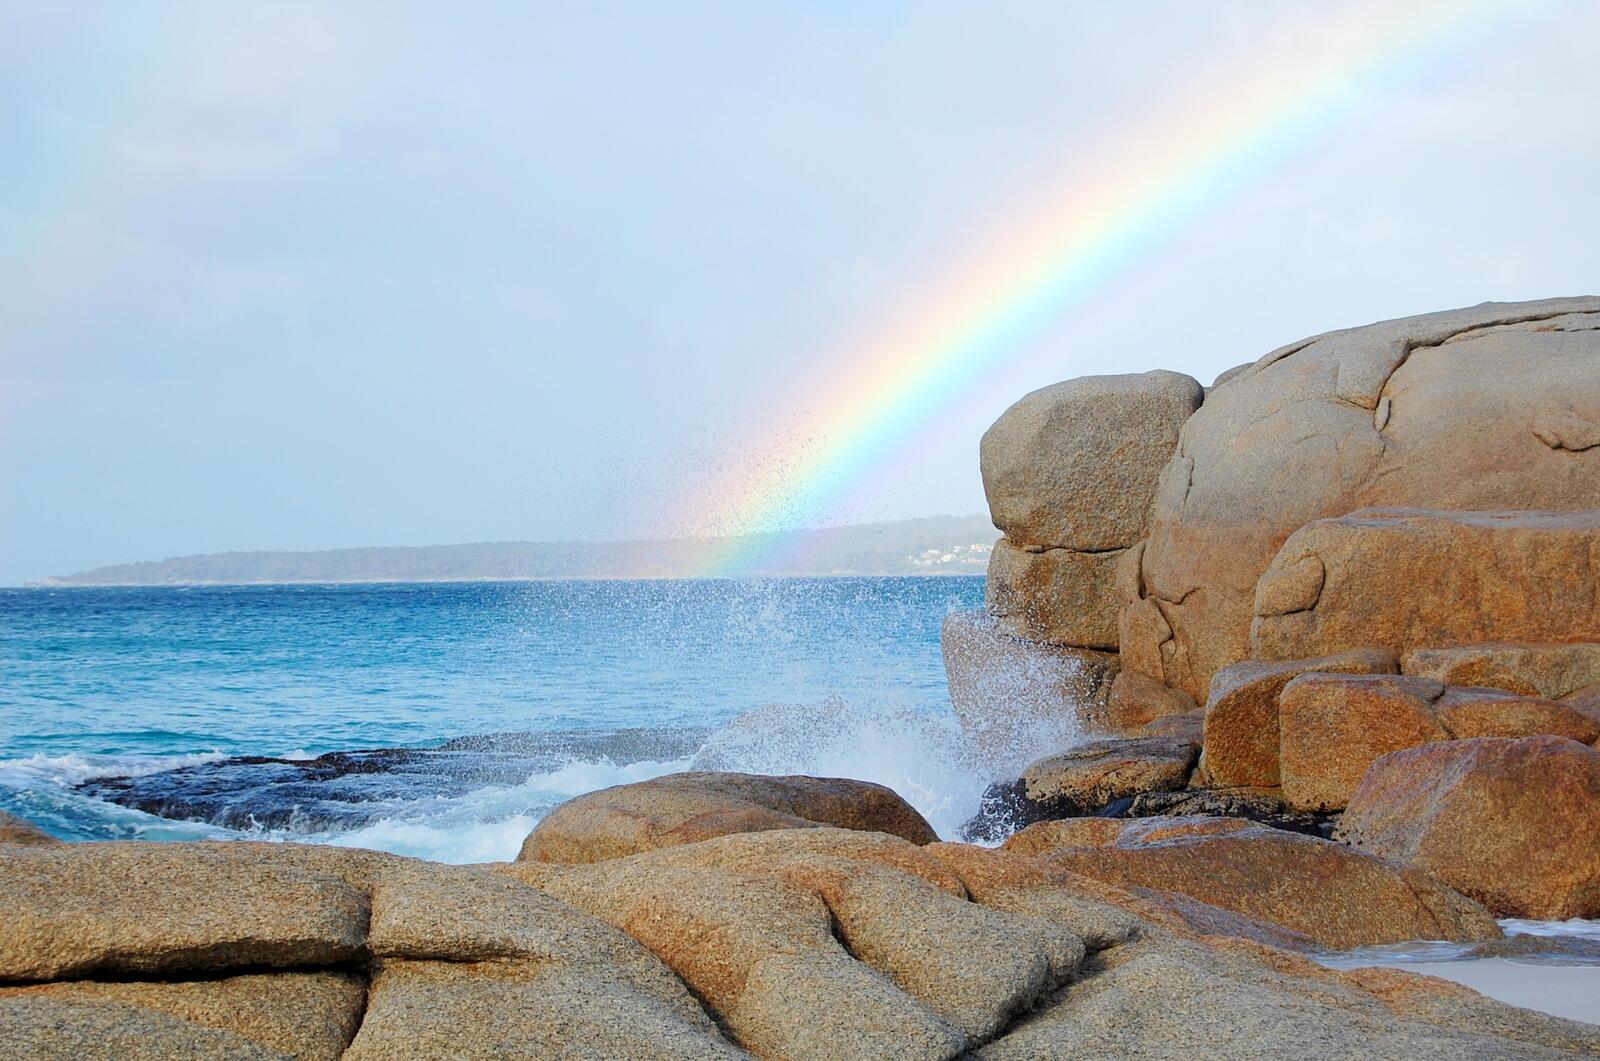 Бесплатное фото Вид с берега моря на радугу